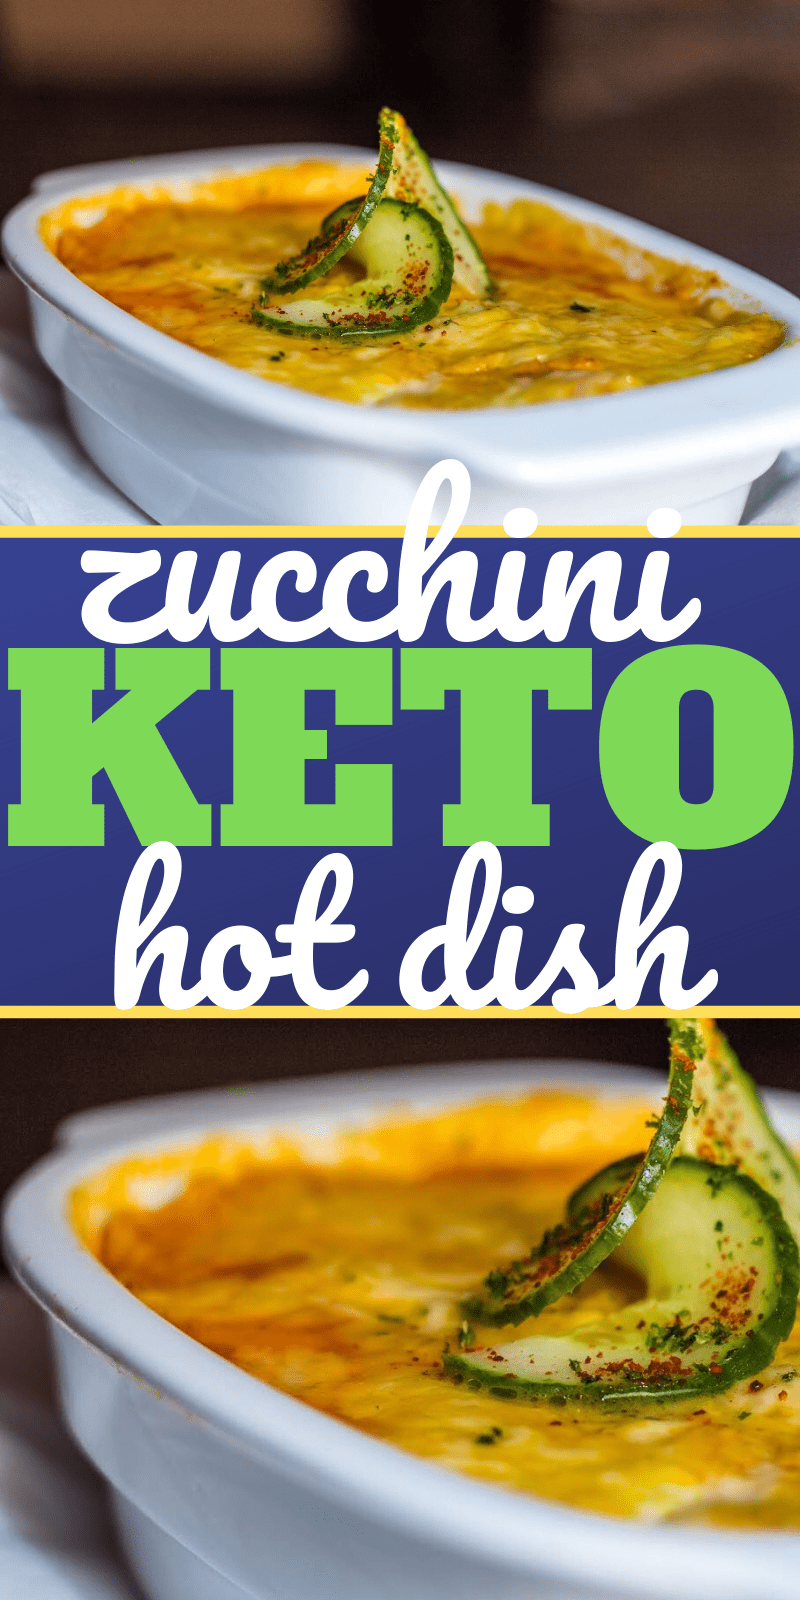 image of Cheesy Keto Zucchini Hot Dish Casserole